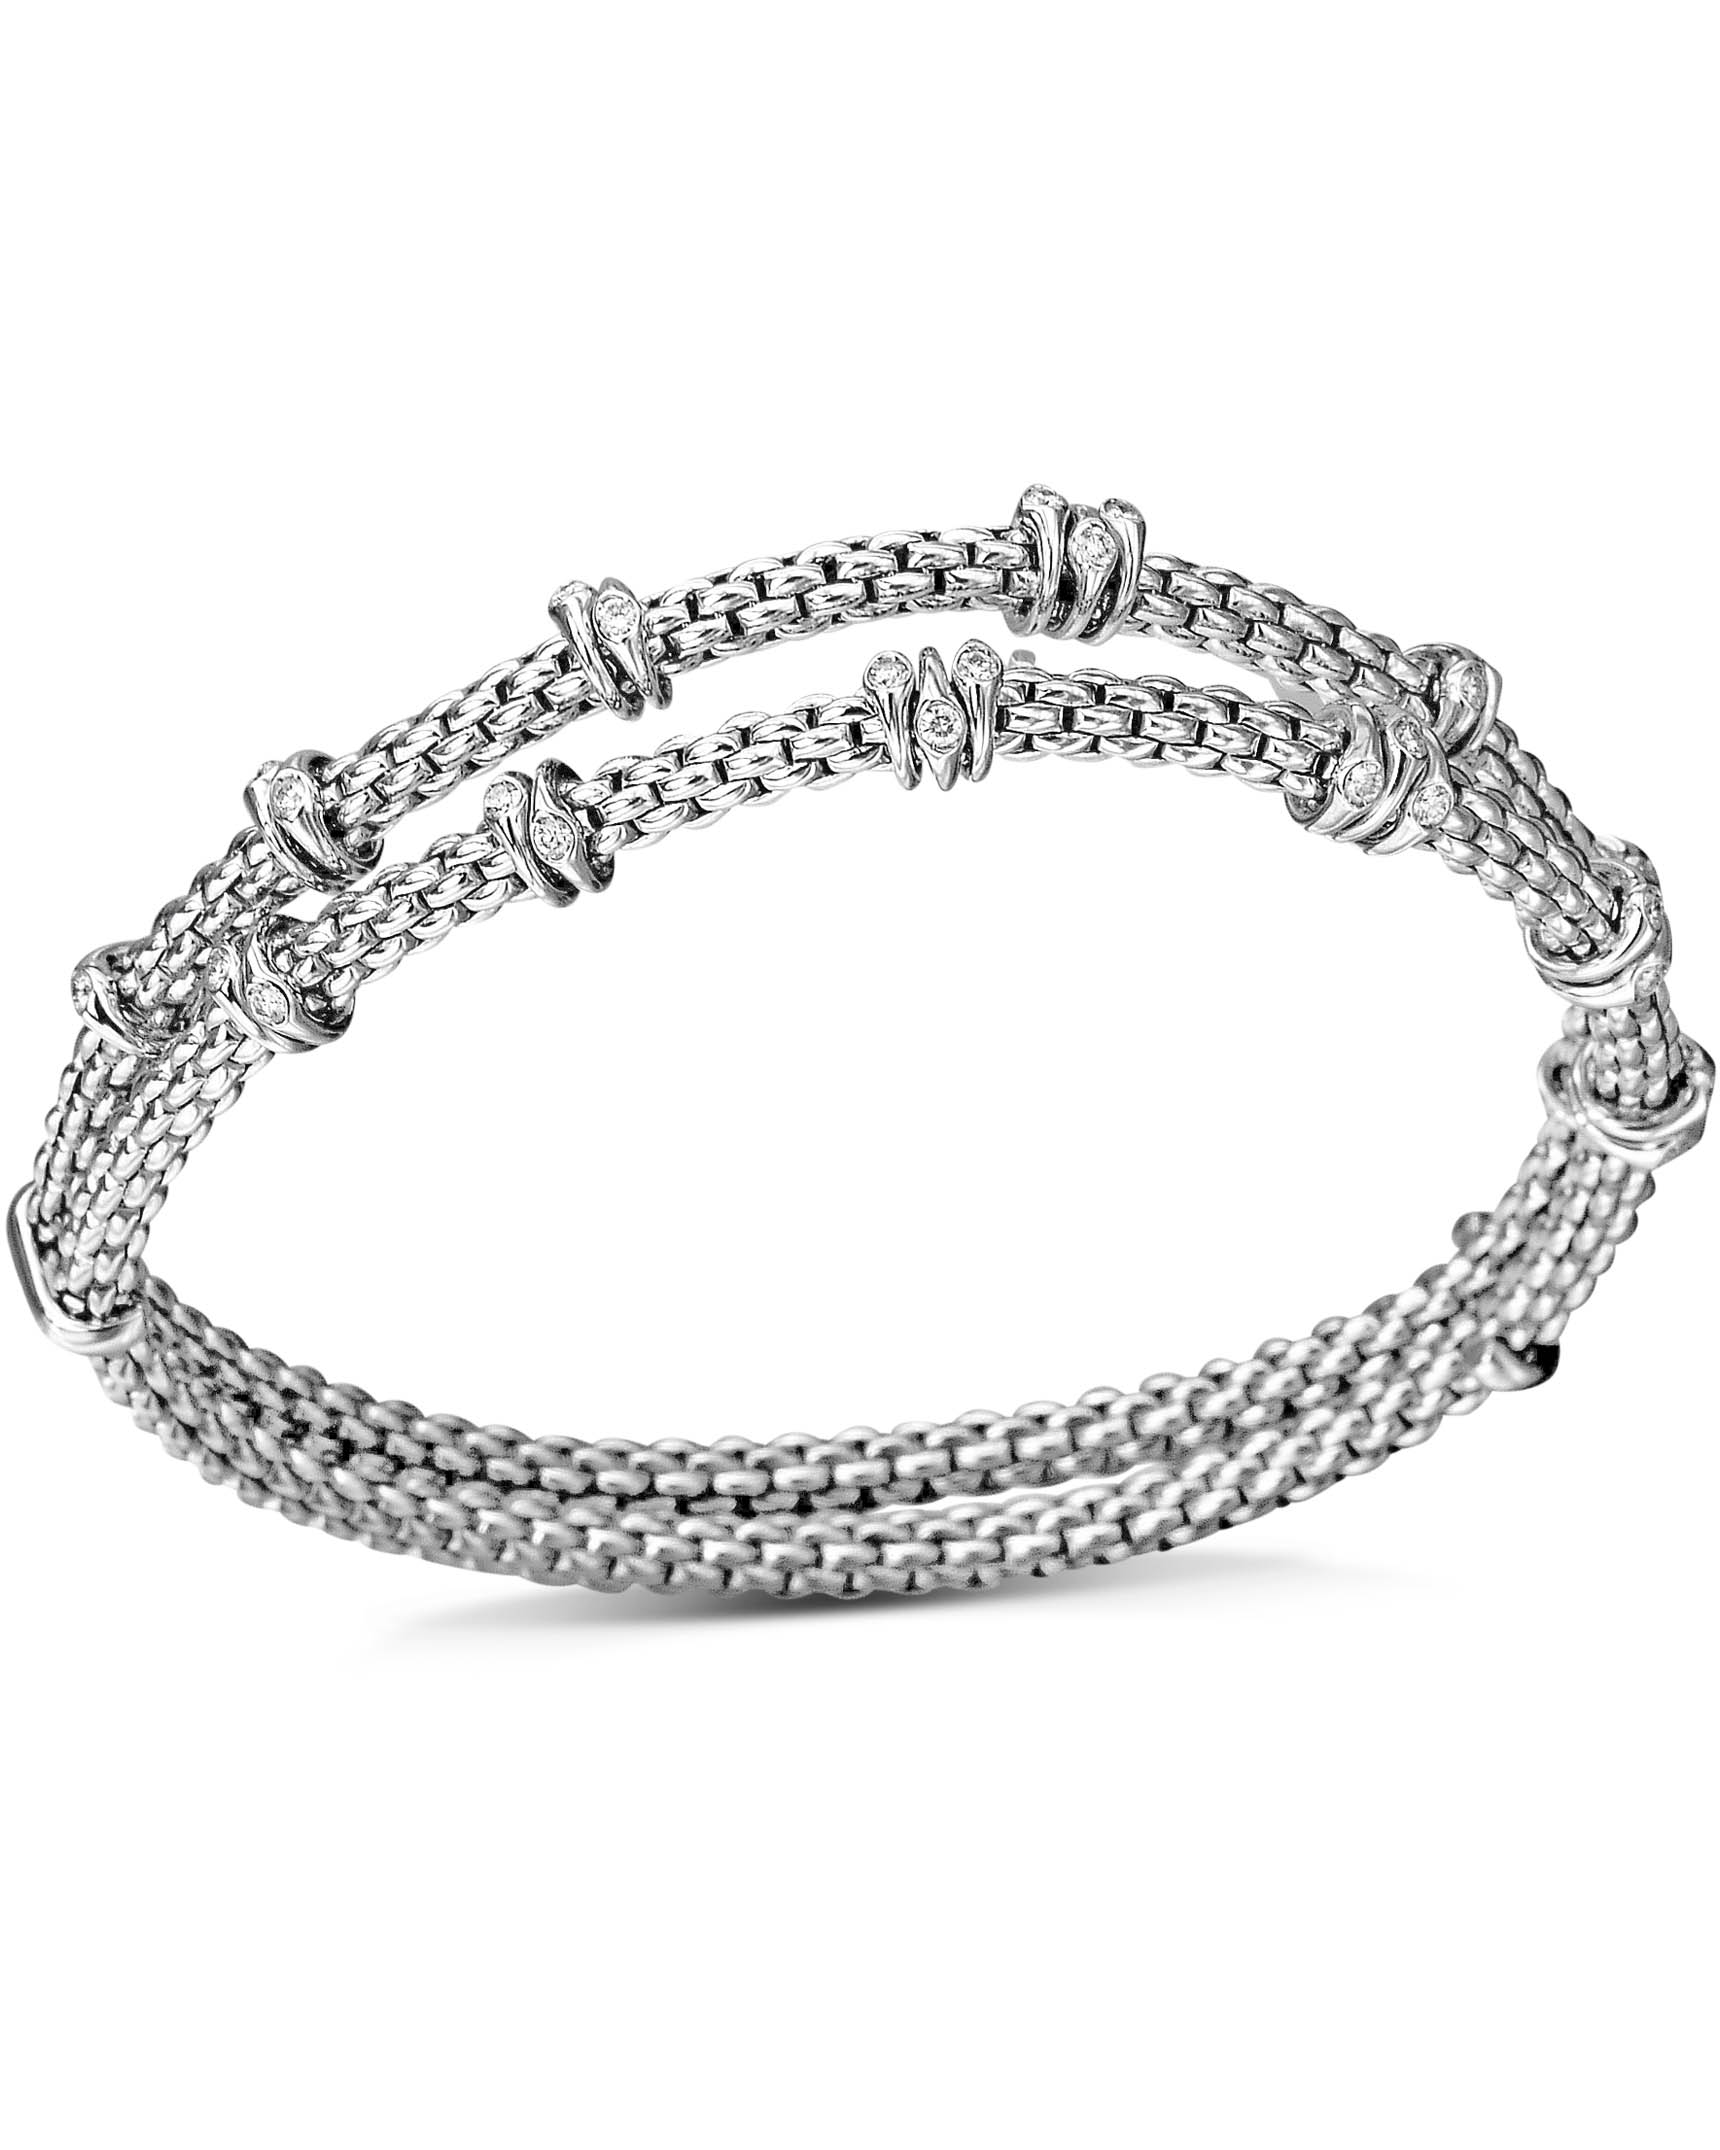 White Gold Flex’It Prima Bracelet by Fope - Turgeon Raine